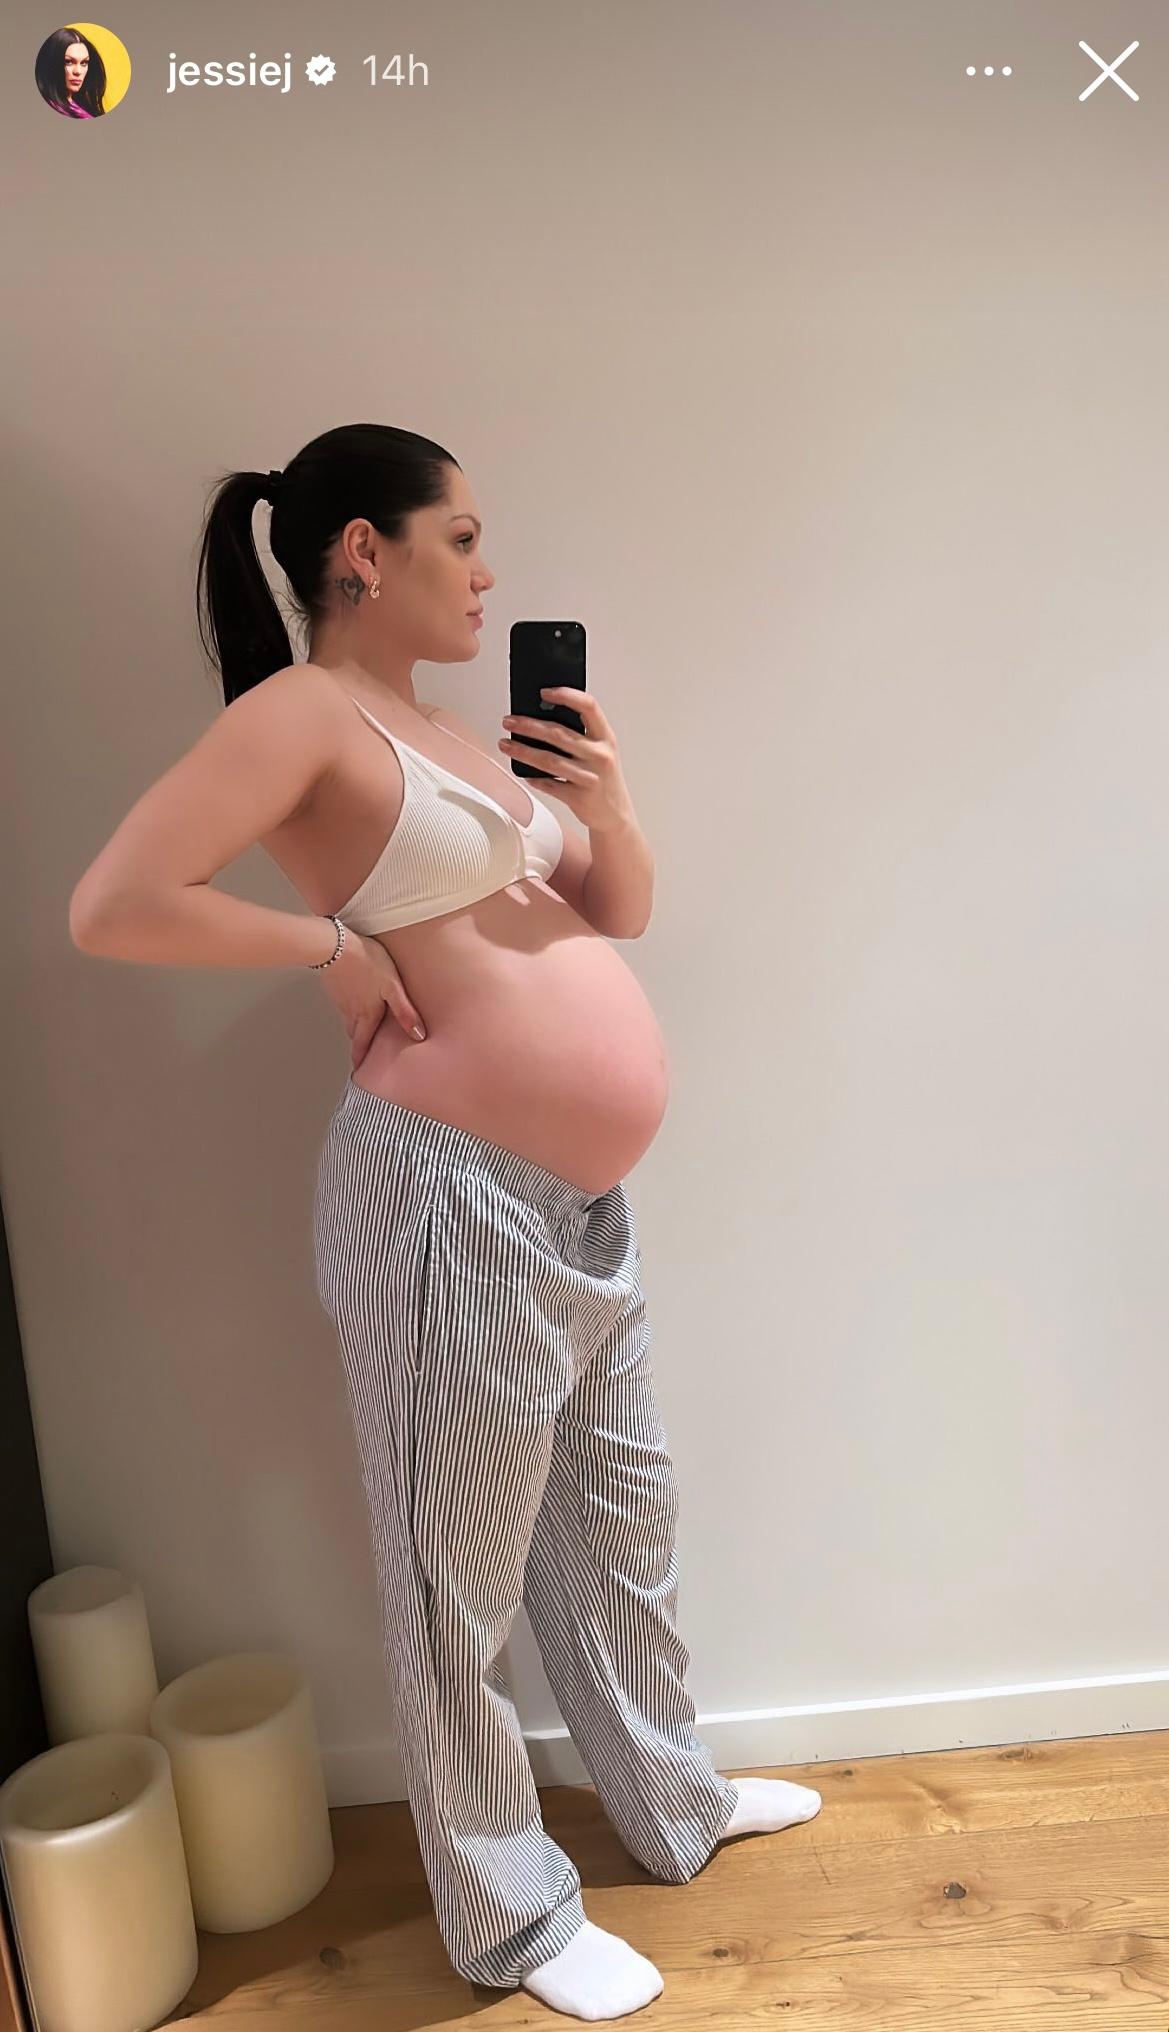 Jessie J enjoys pregnancy glow while flaunting baby bump